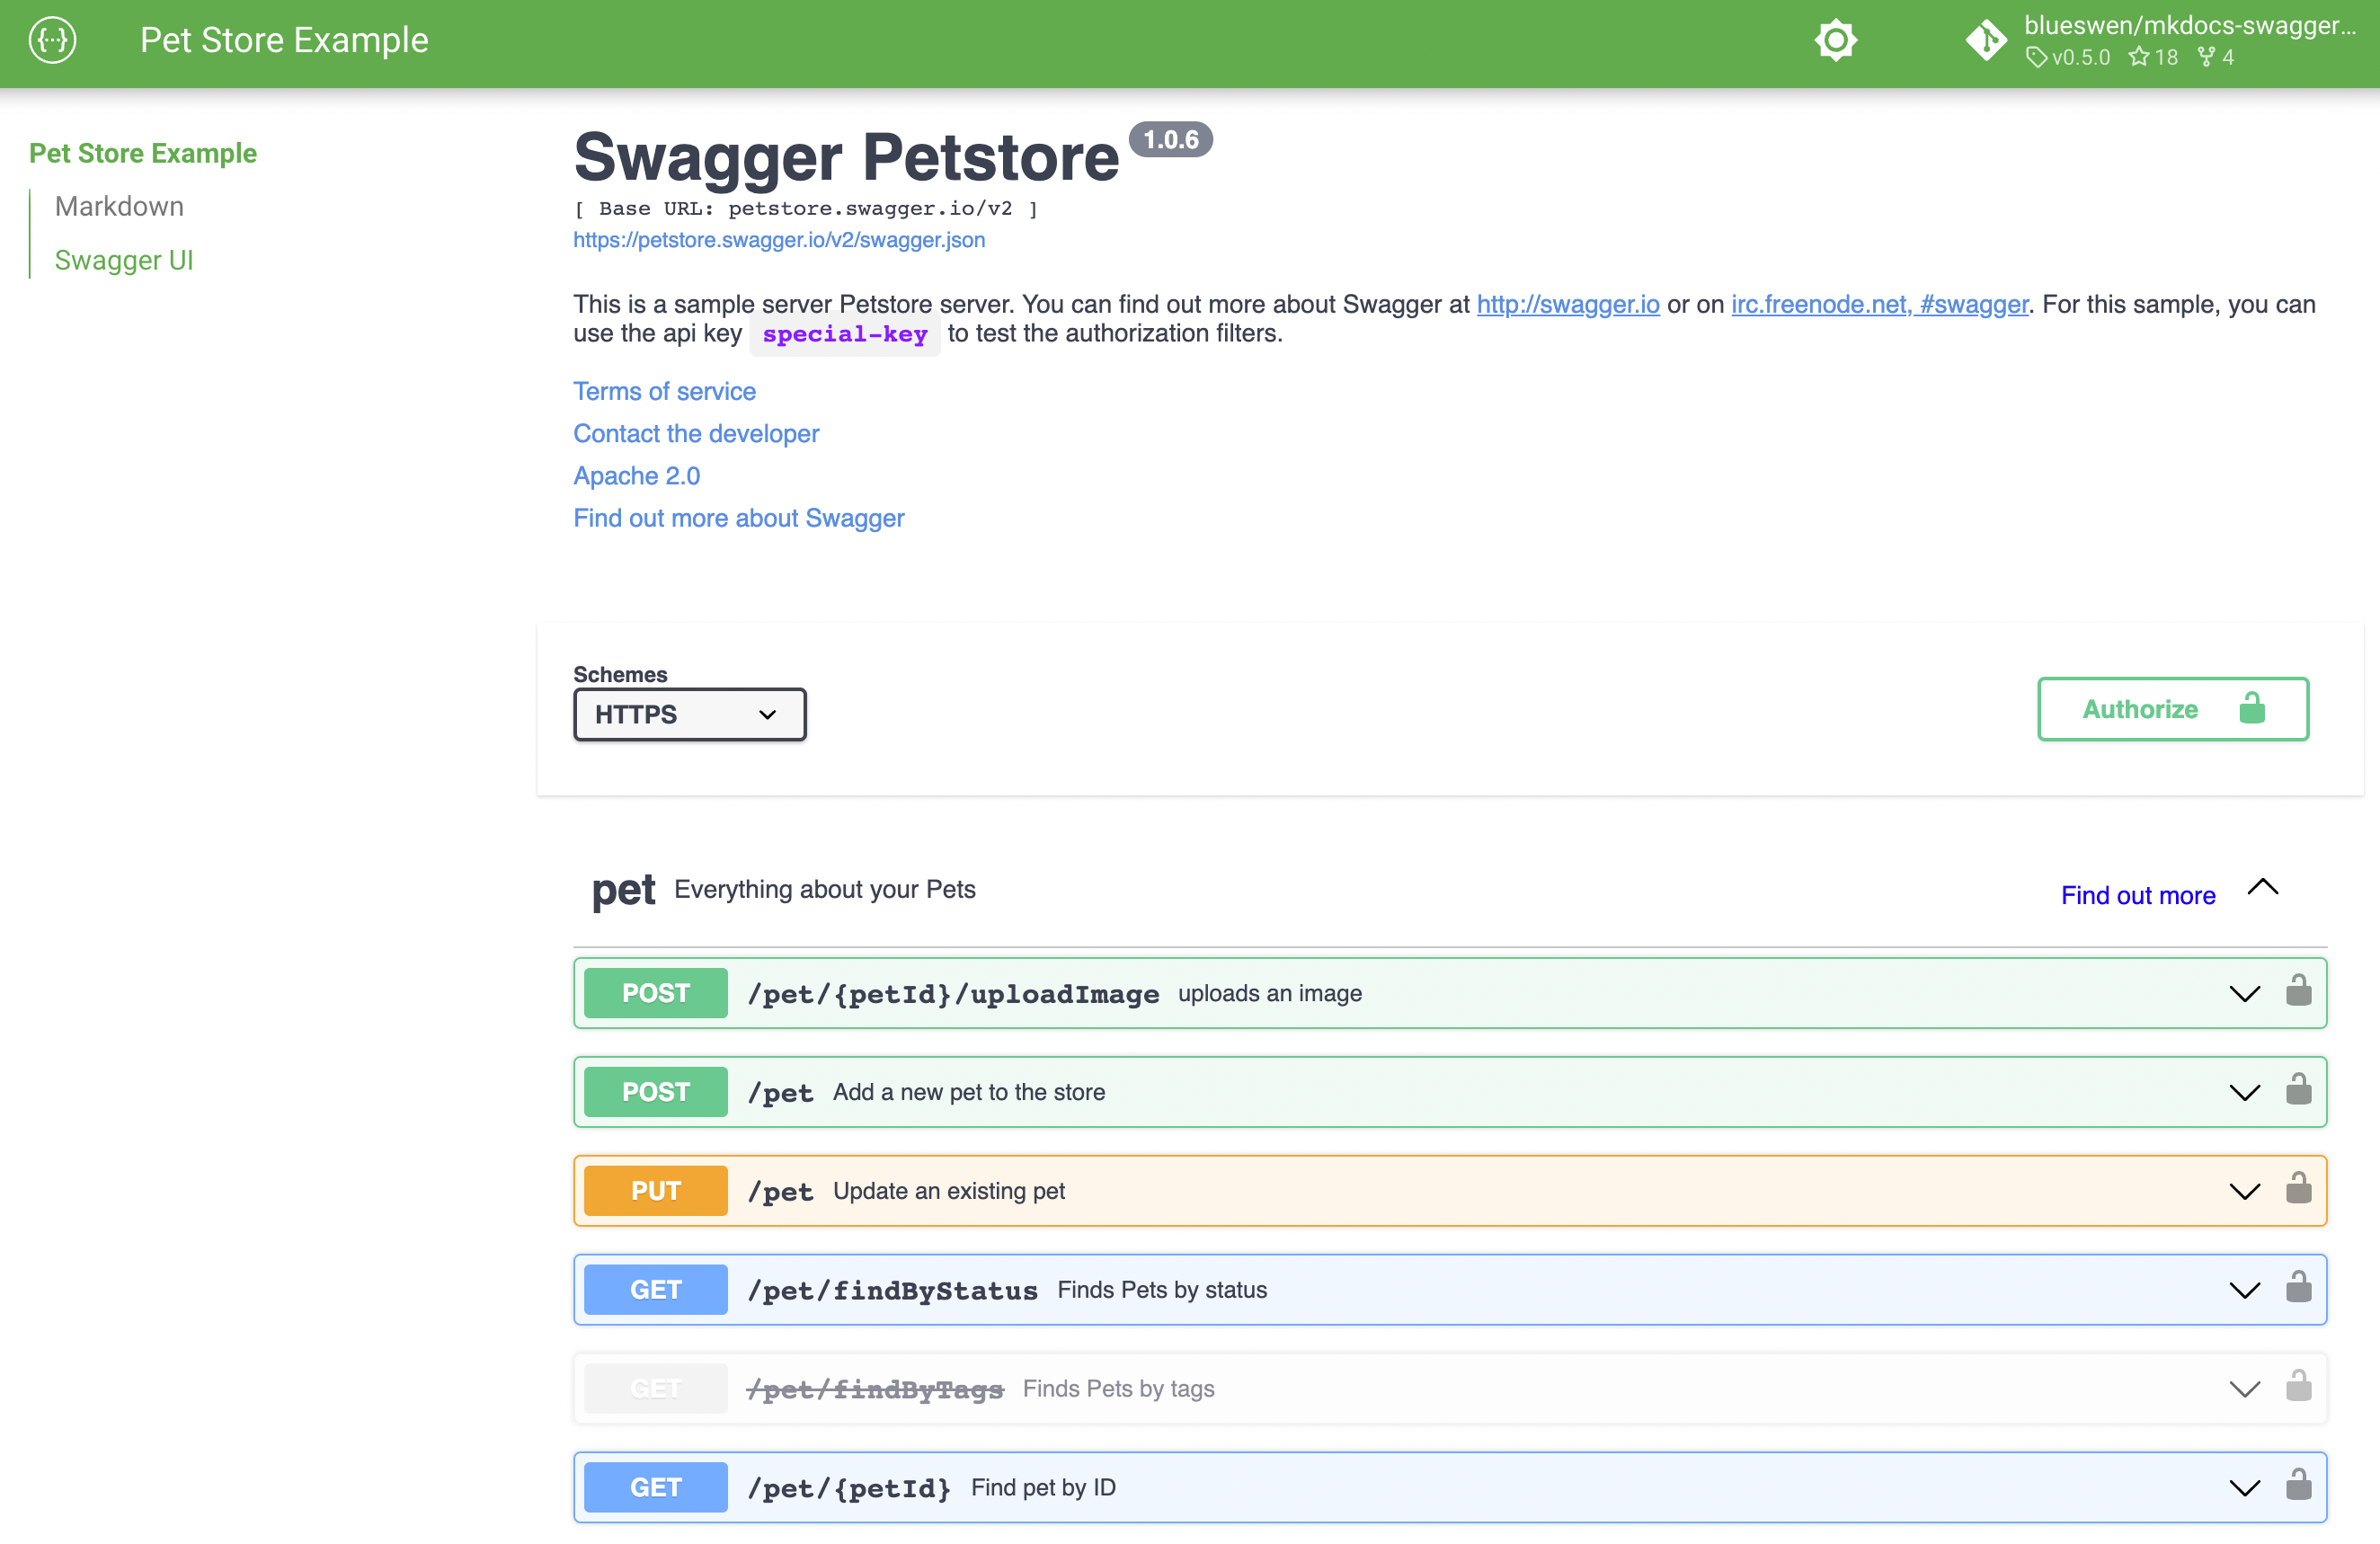 Swagger UI Sample Image